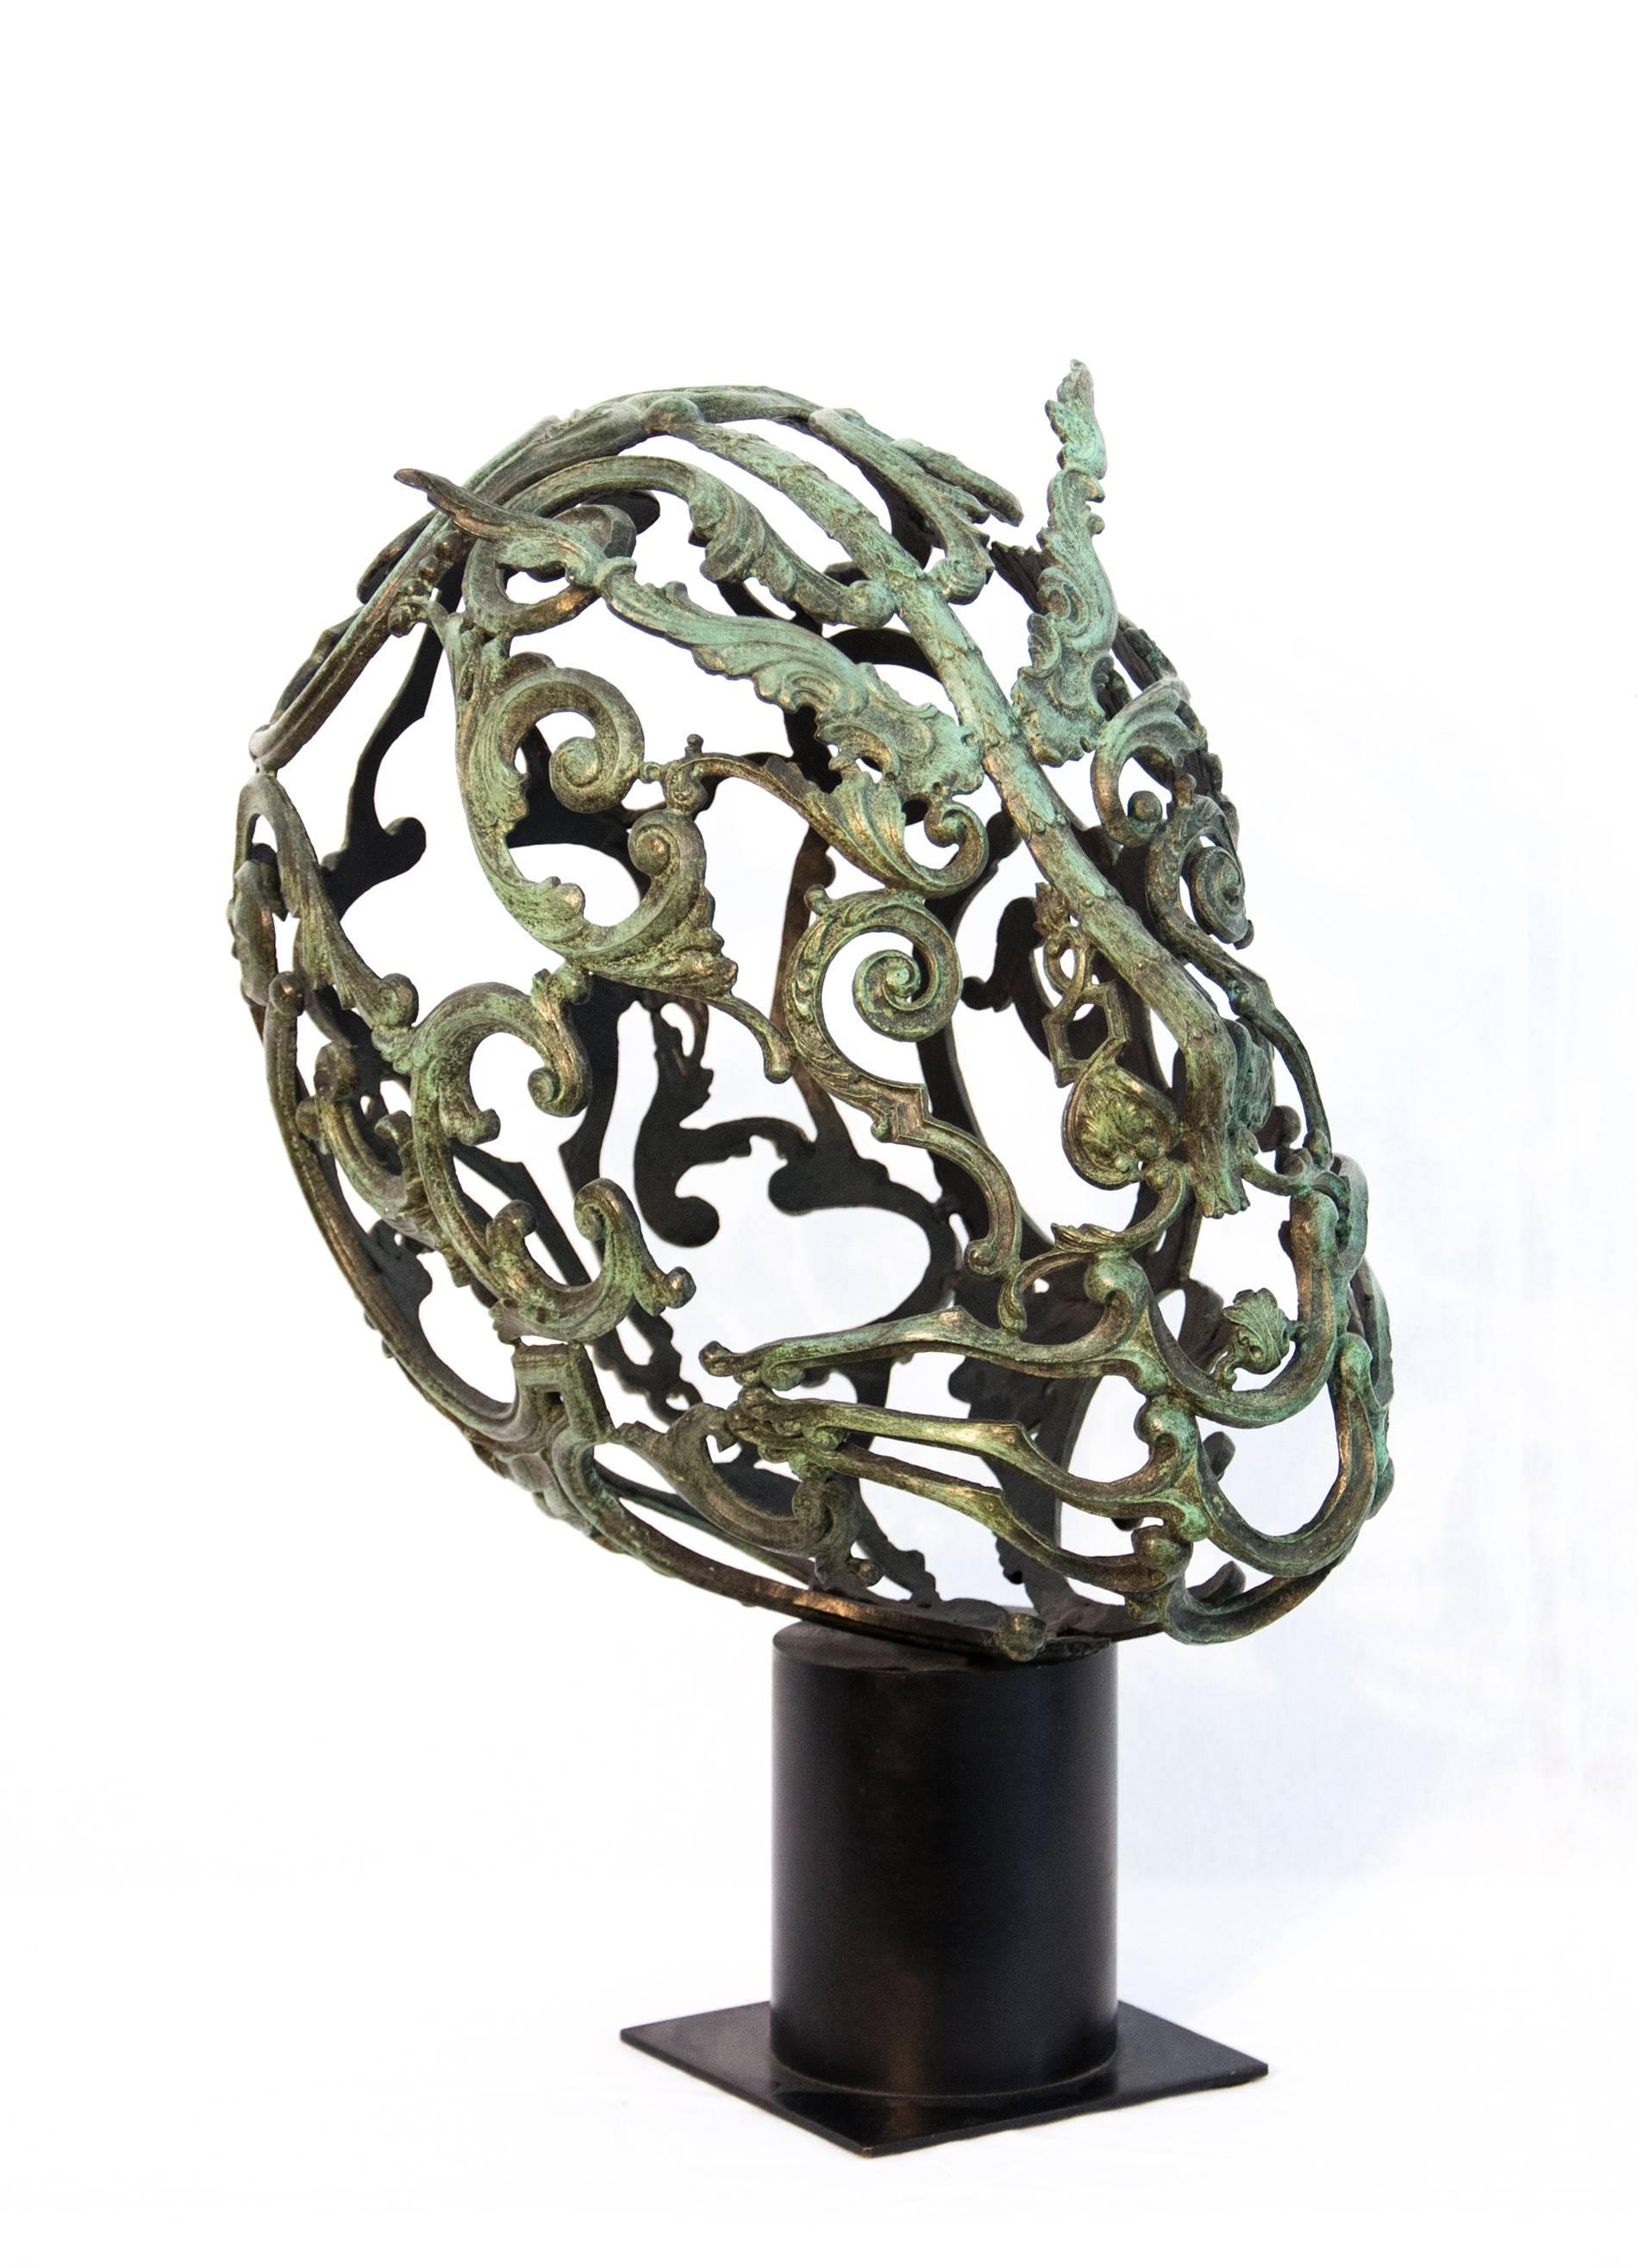 Green Samurai - patinated, rustic, baroque, figurative, bronze wall sculpture - Sculpture by Dale Dunning